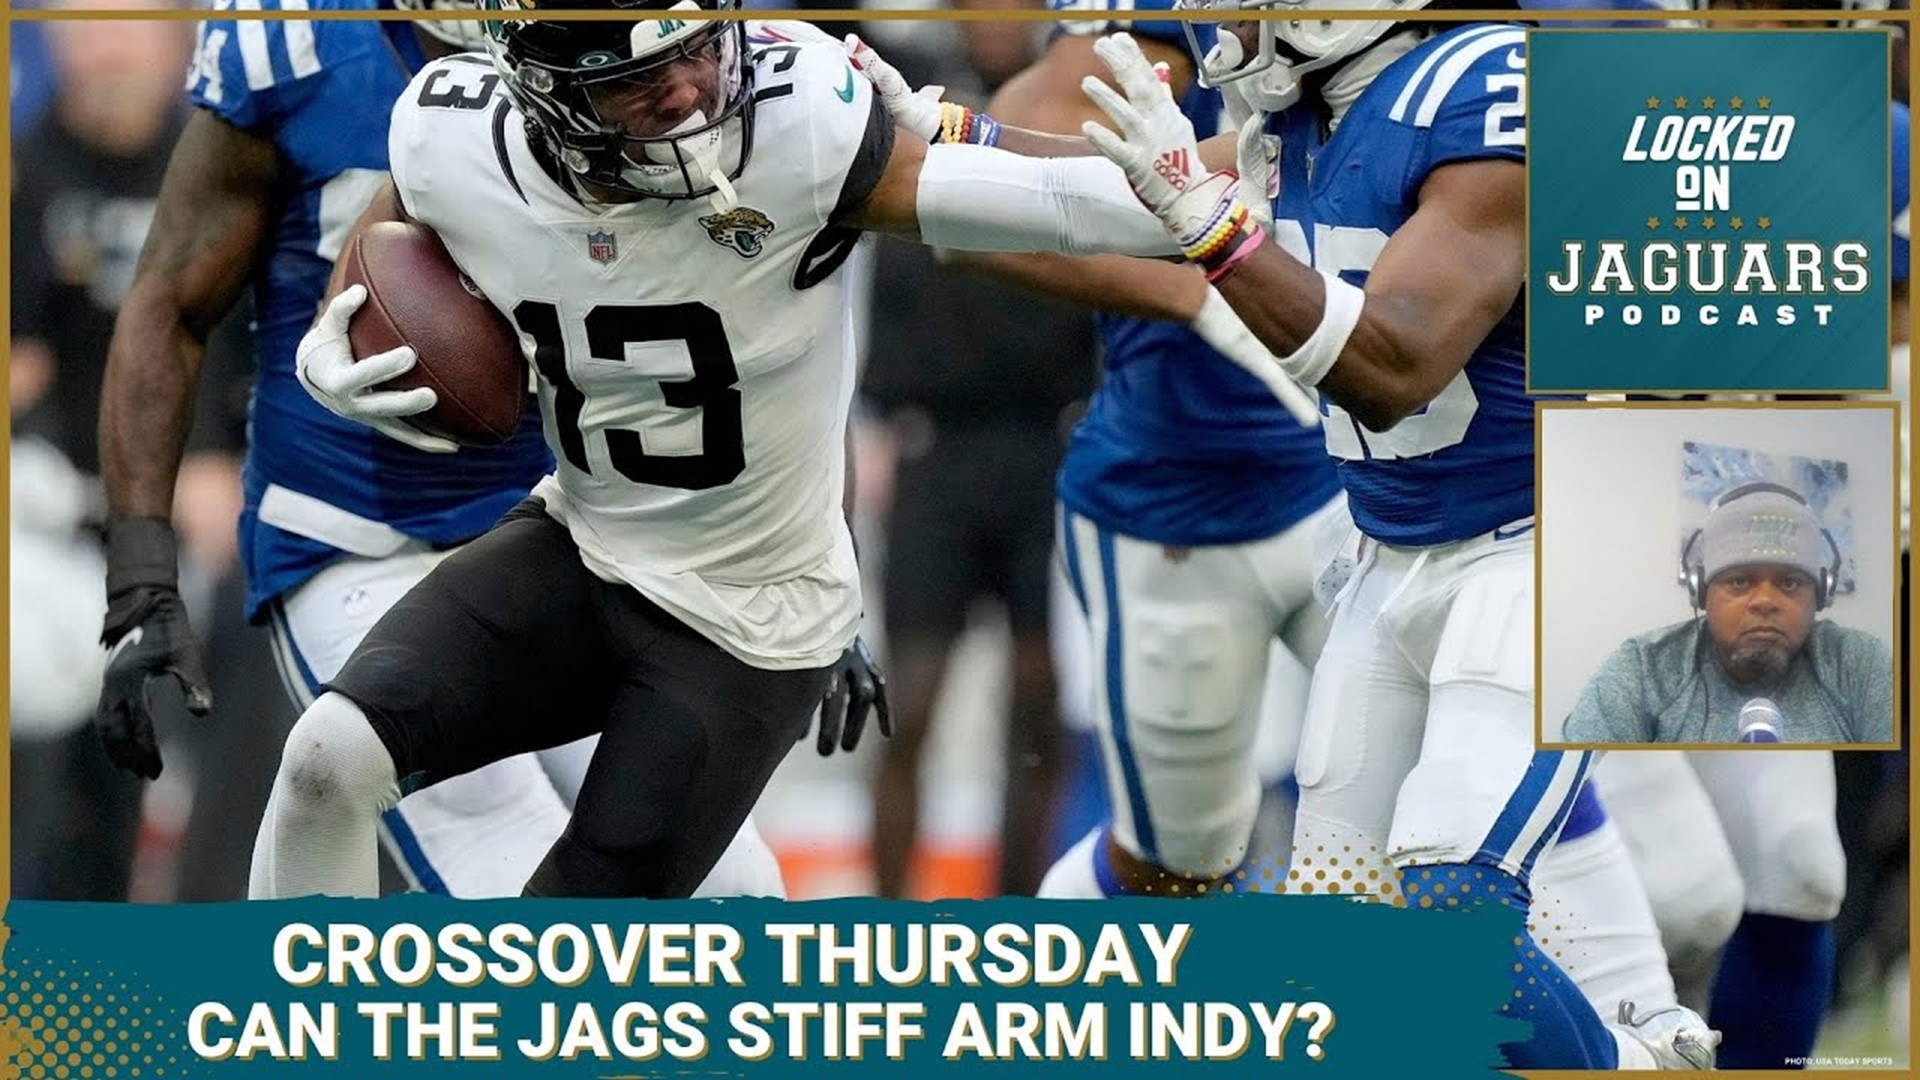 The Jacksonville Jaguars visit the Colts In Week 1